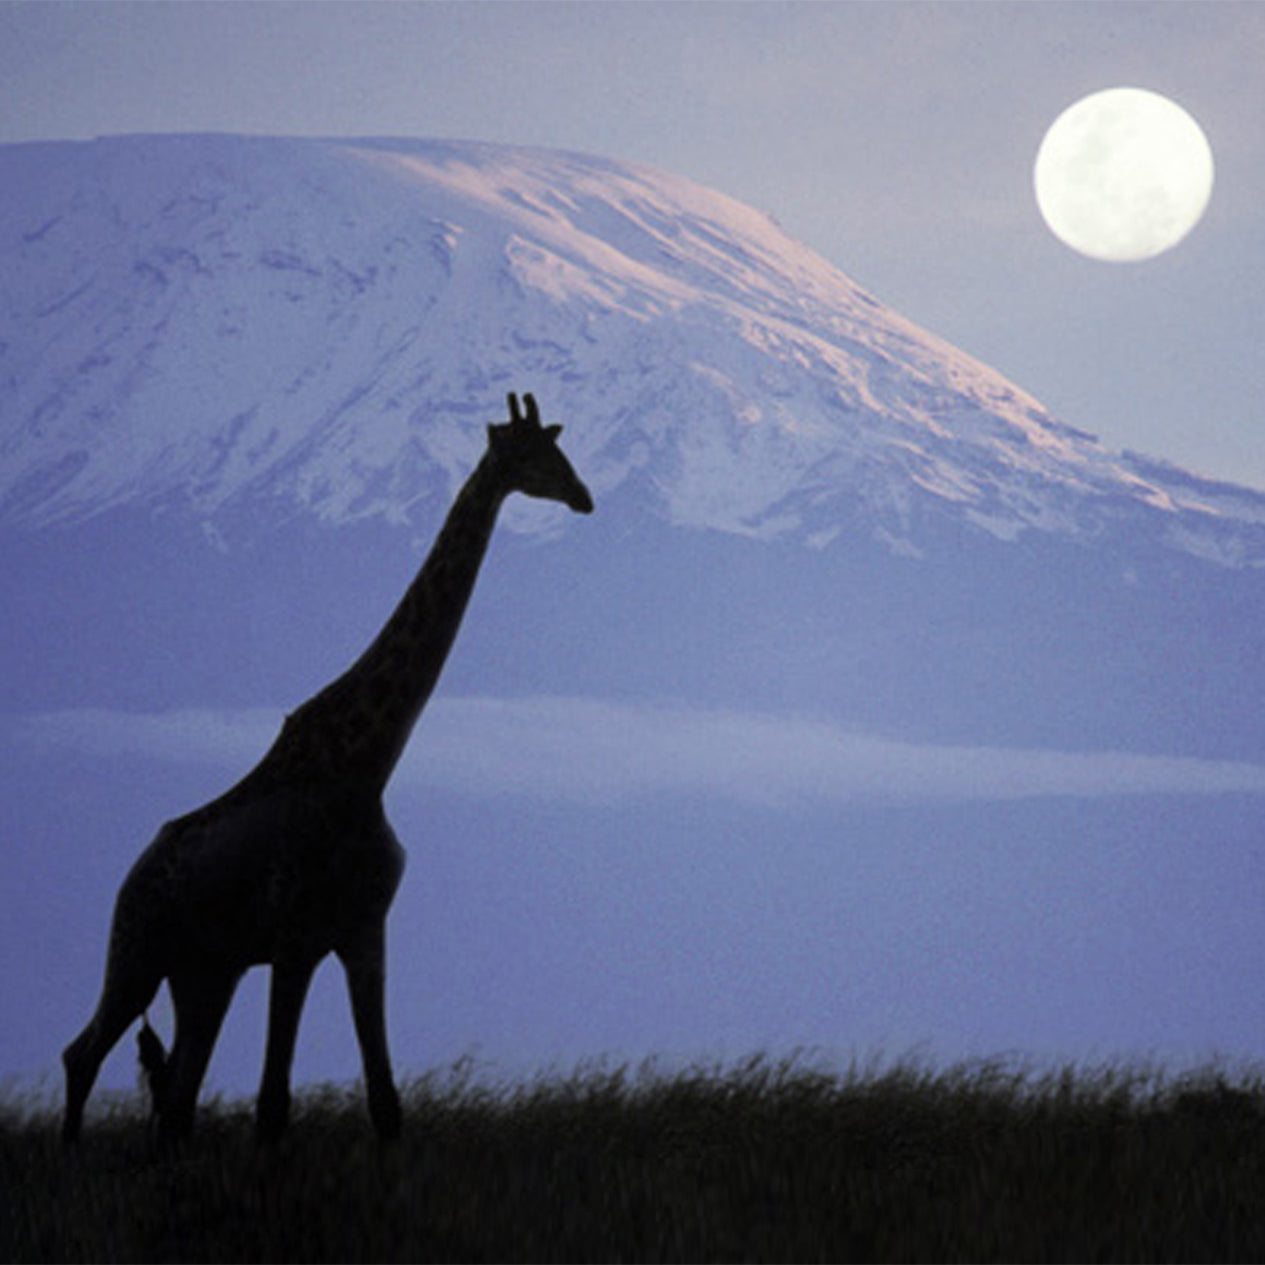 Mount Kilimanjaro with a giraffe walking through the grass